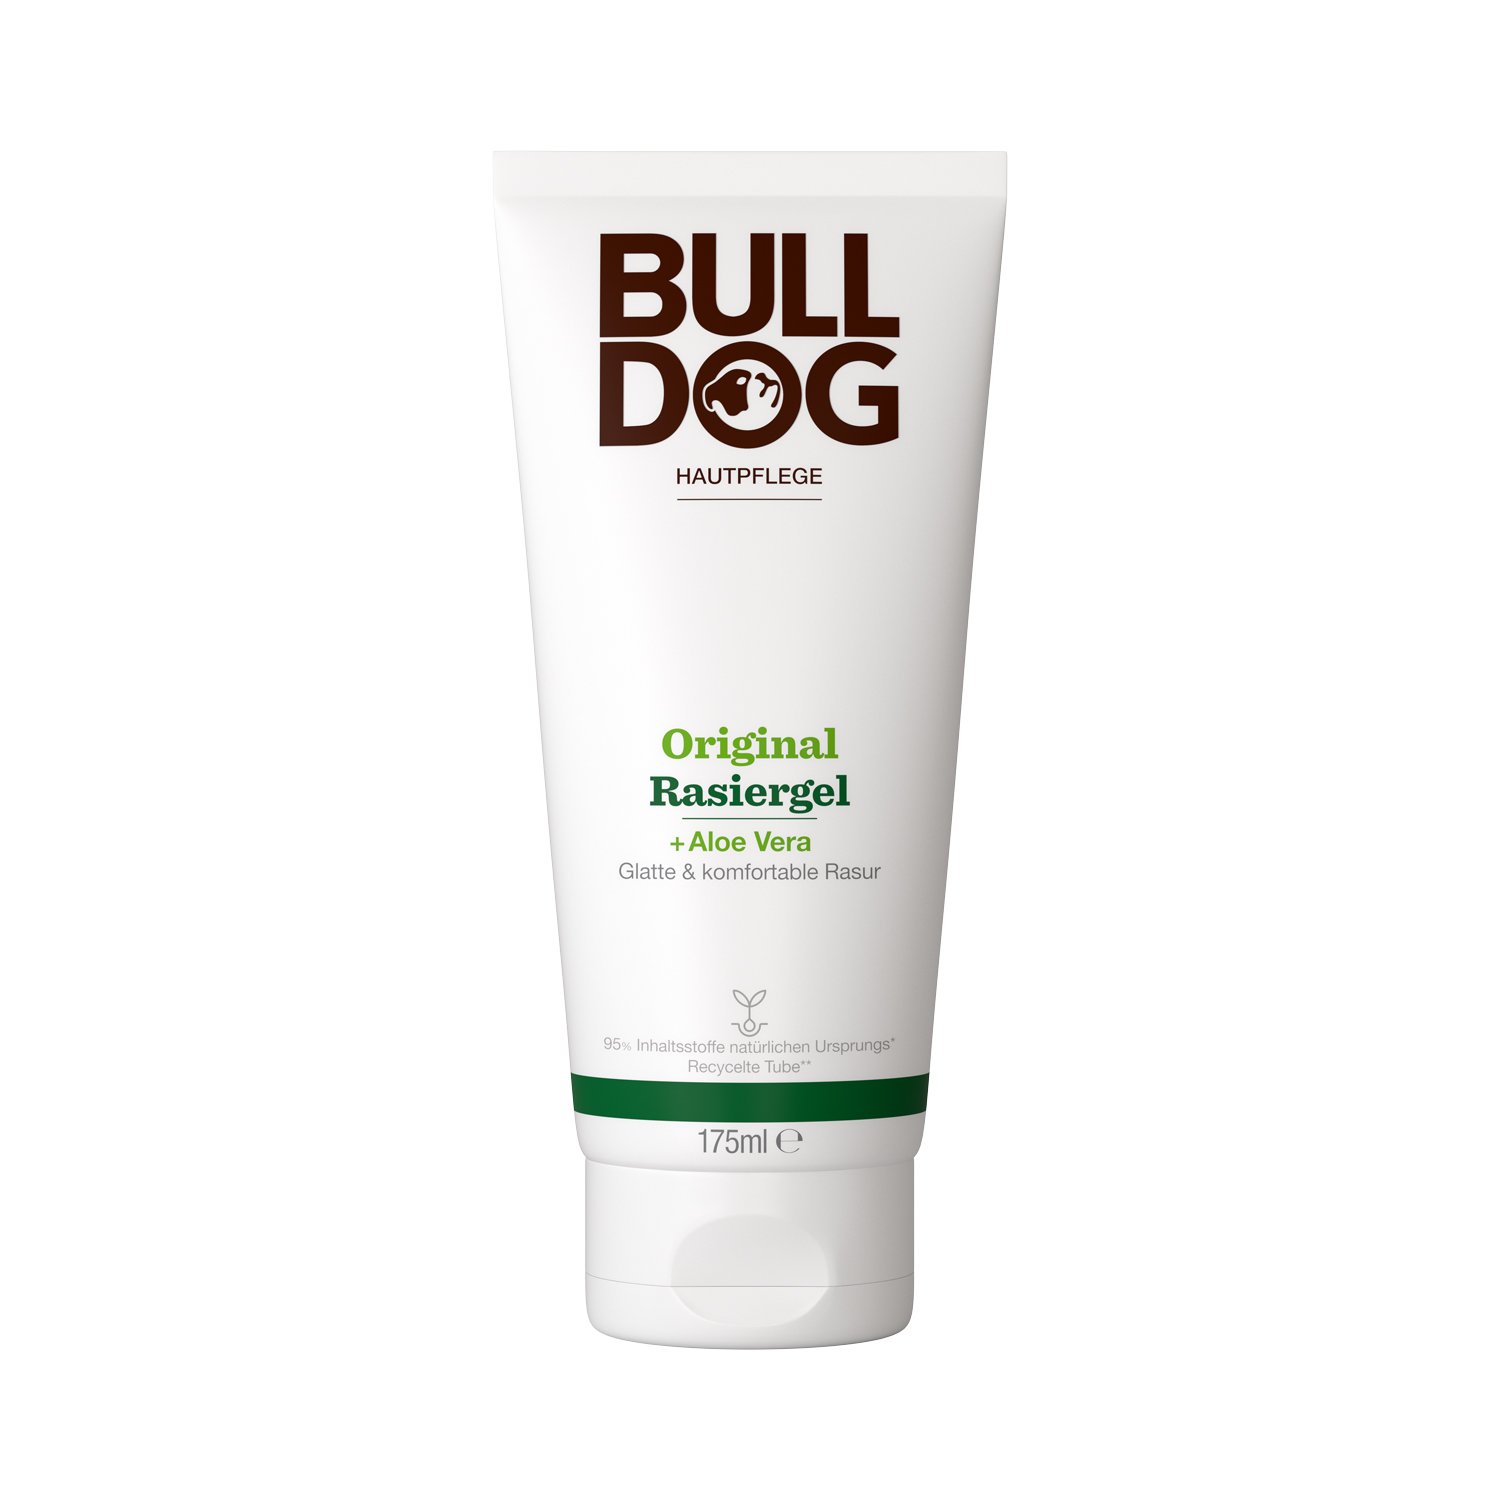 Bulldog - Original Shave Gel - Rasiergel